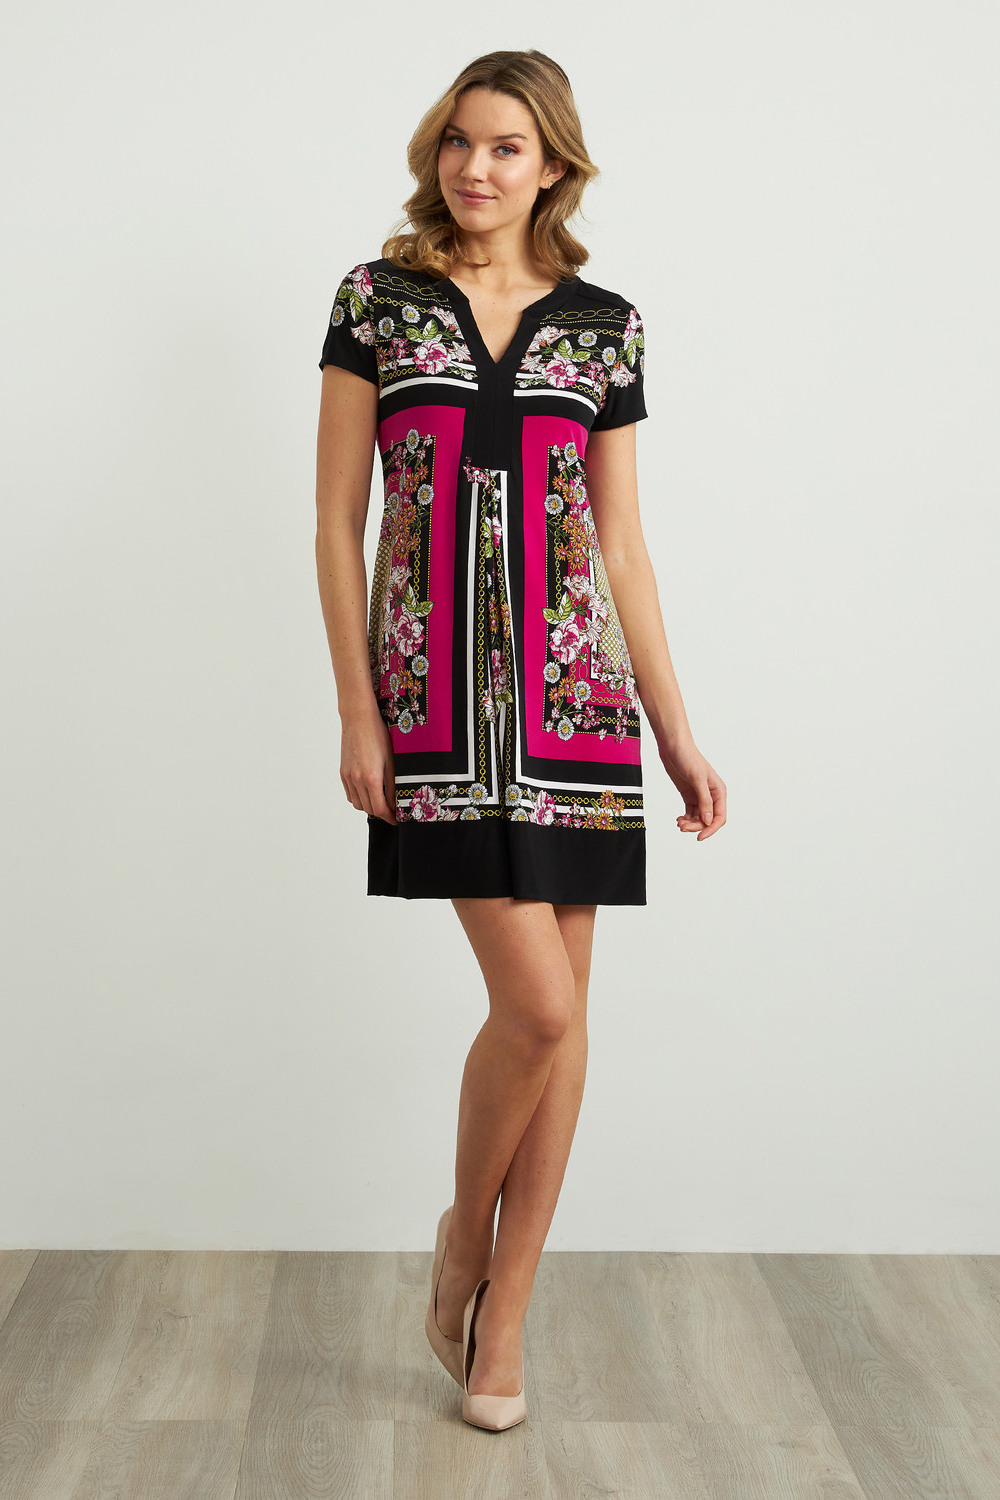 Joseph Ribkoff Floral & Chain Print Dress Style 211444. Black/multi